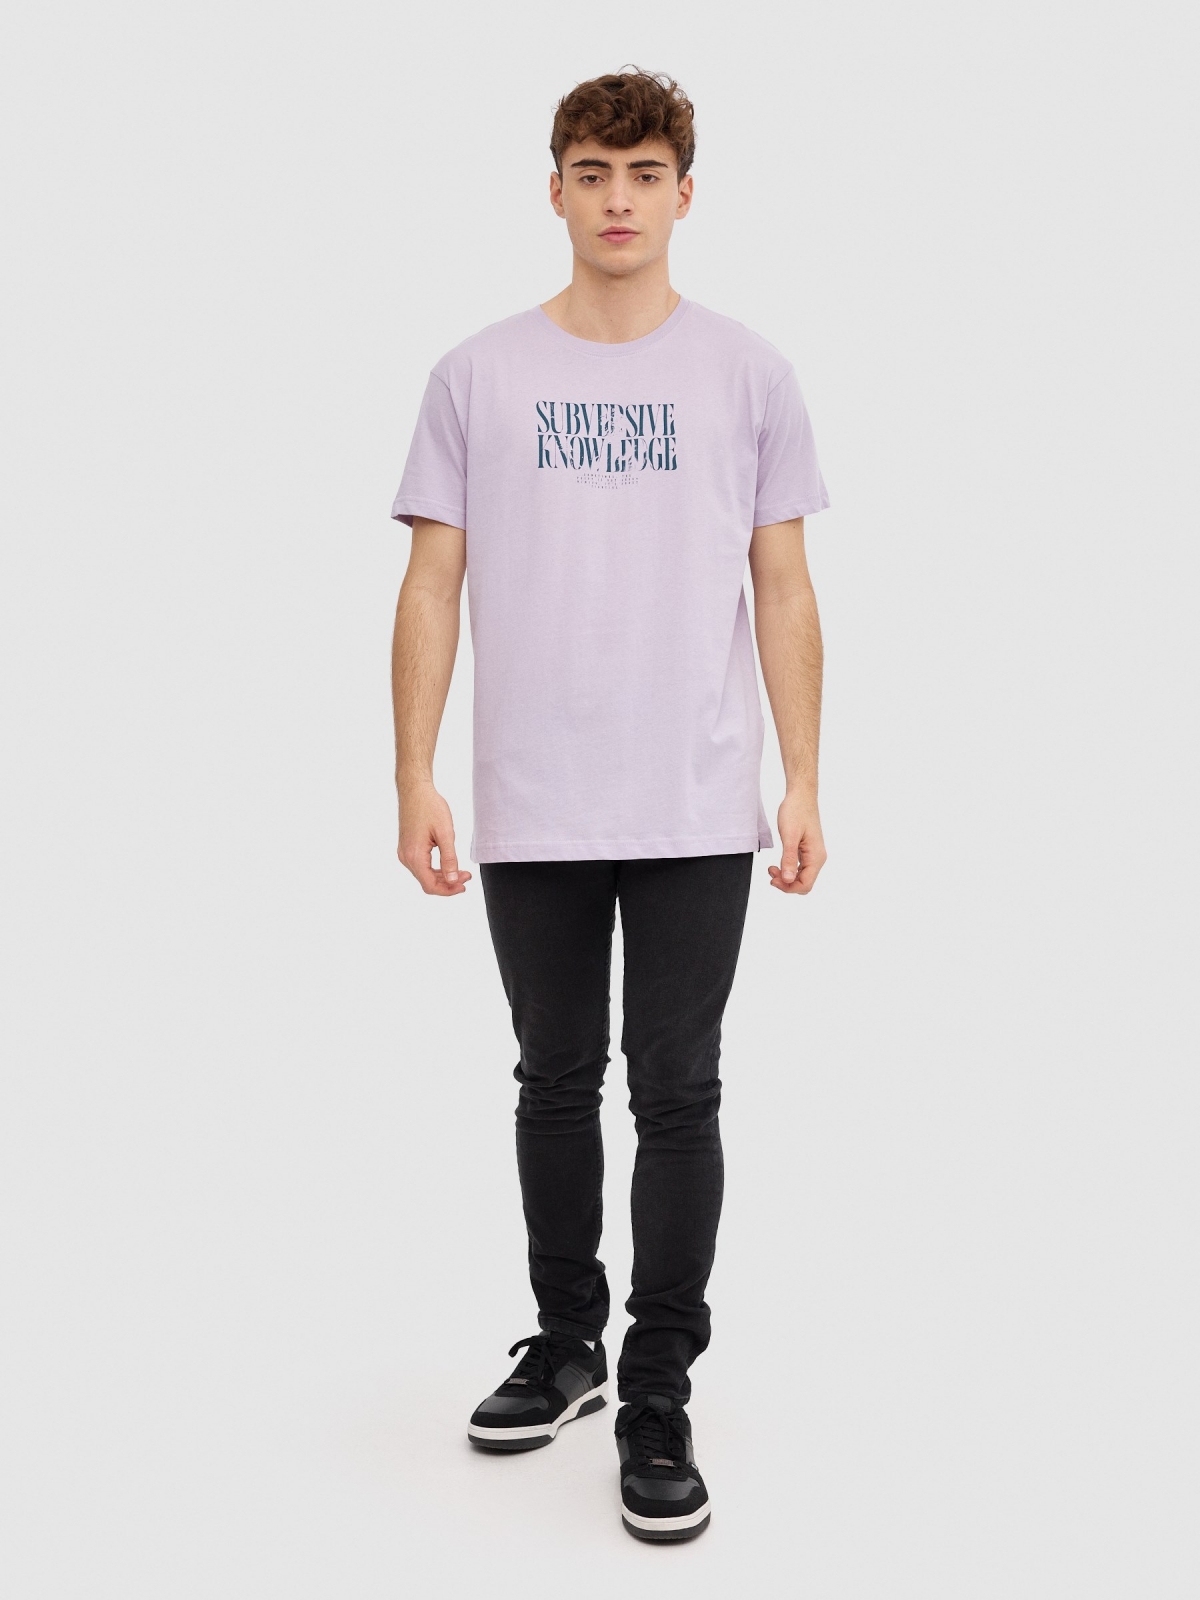 Camiseta texto minimalista morado vista general frontal